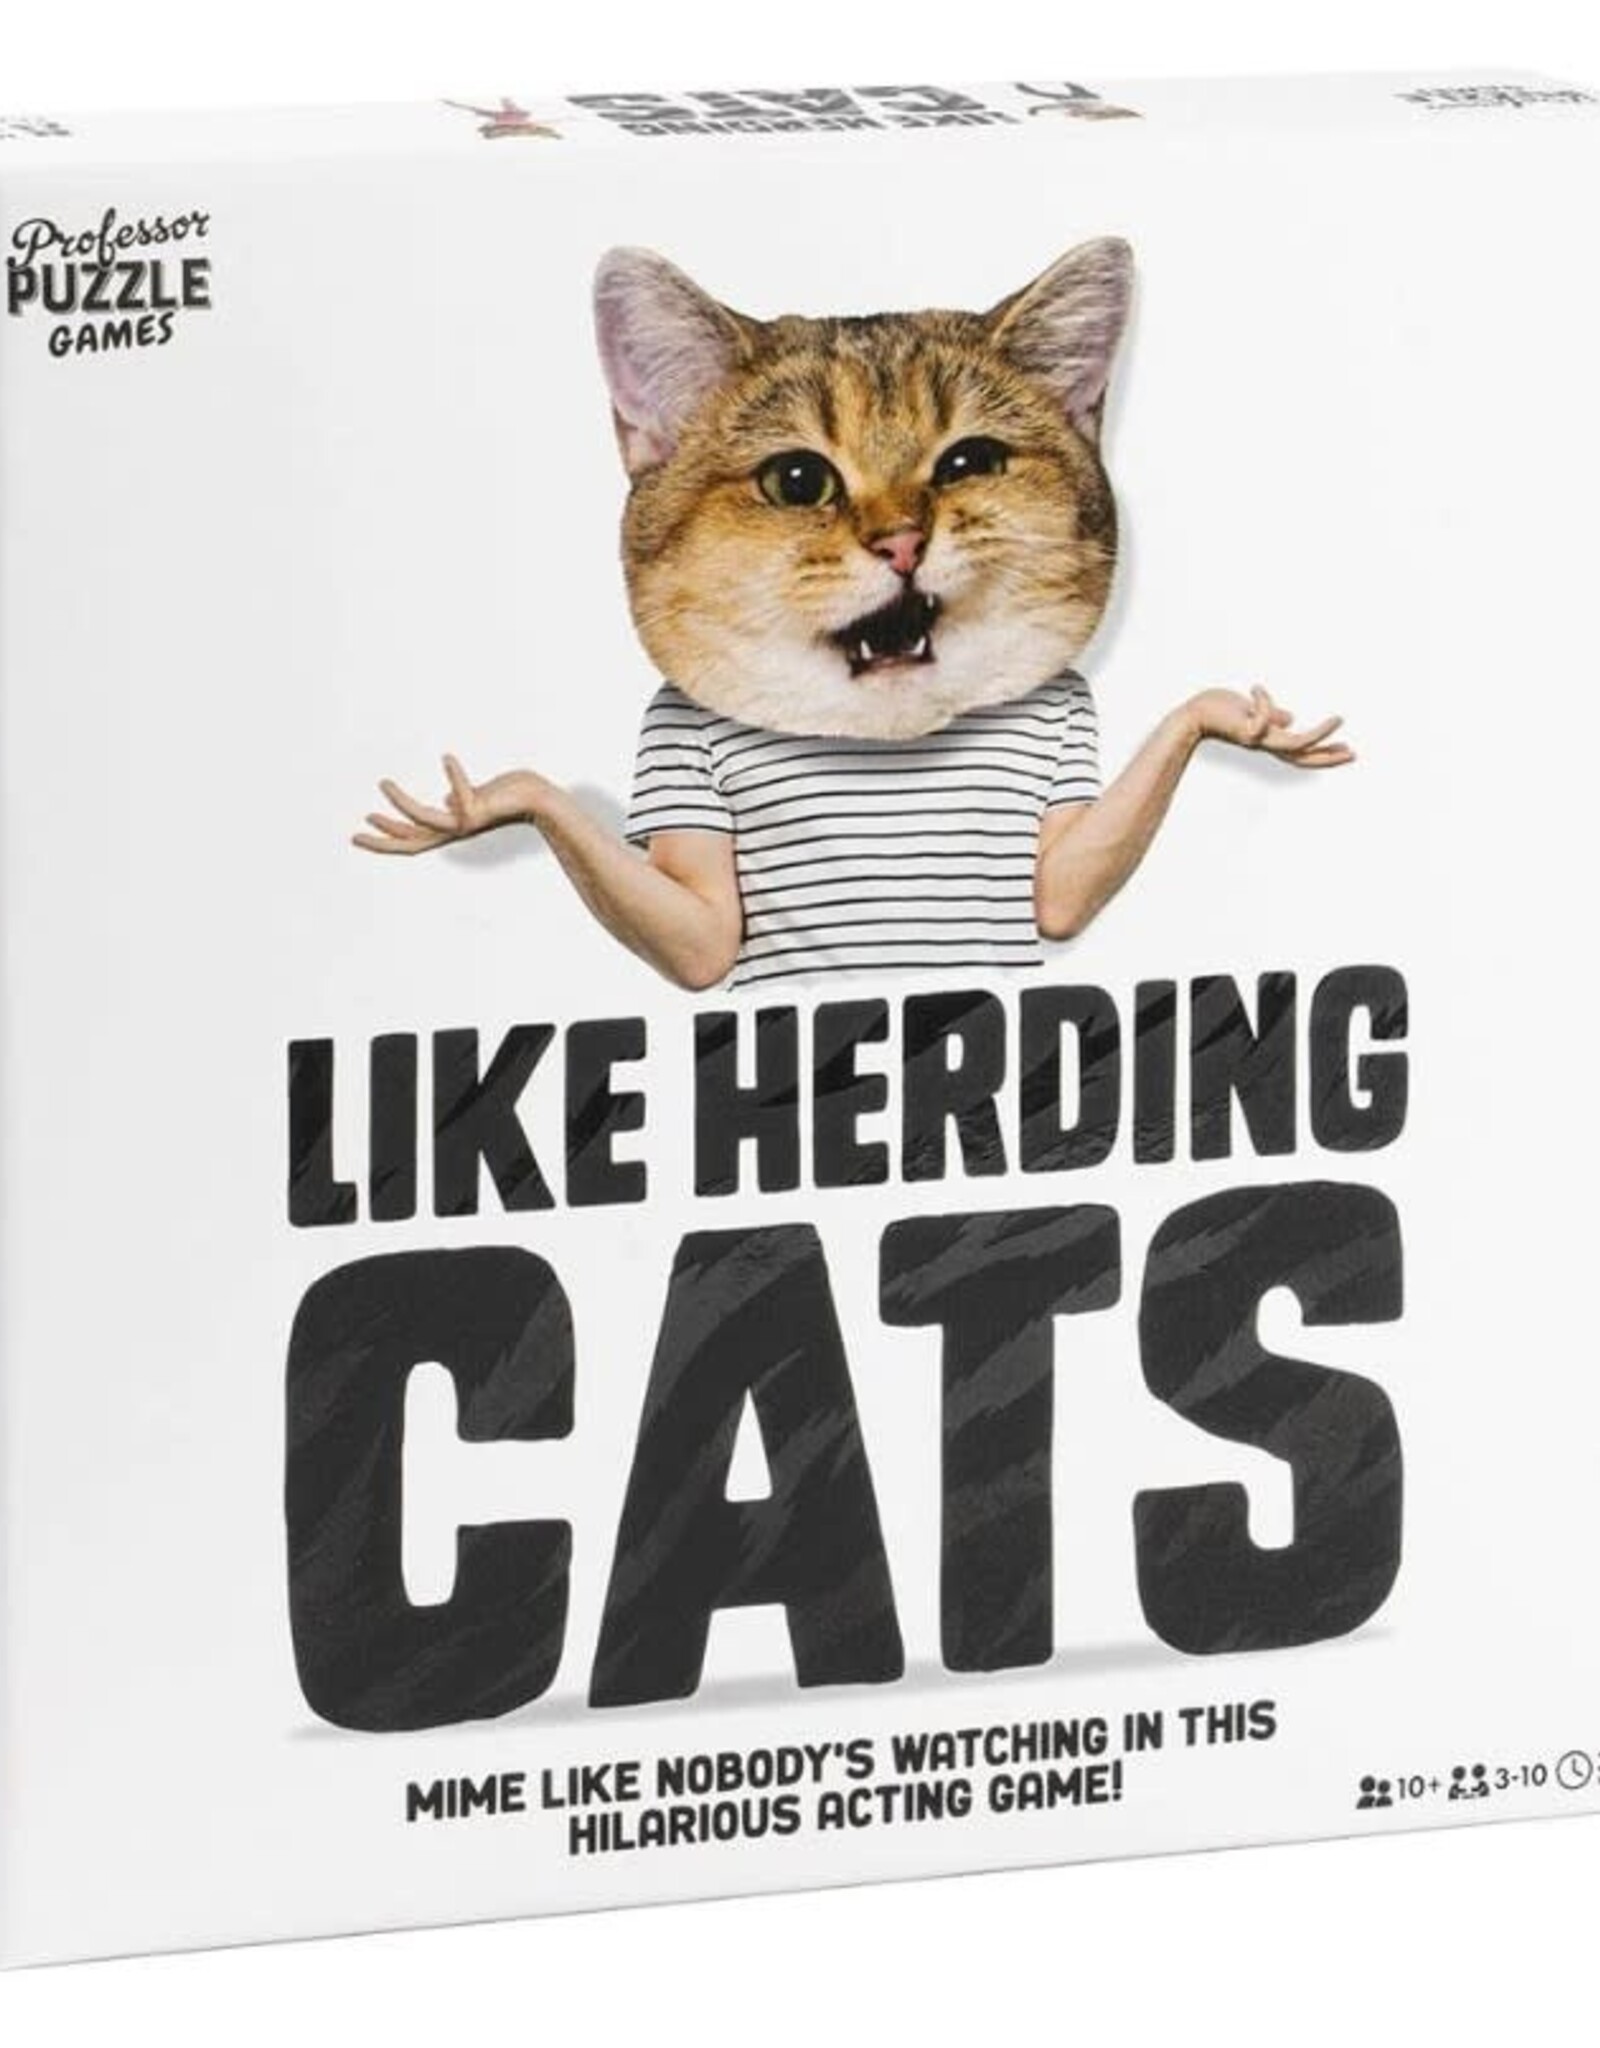 Professor Puzzle LIKE HERDING CATS GAME